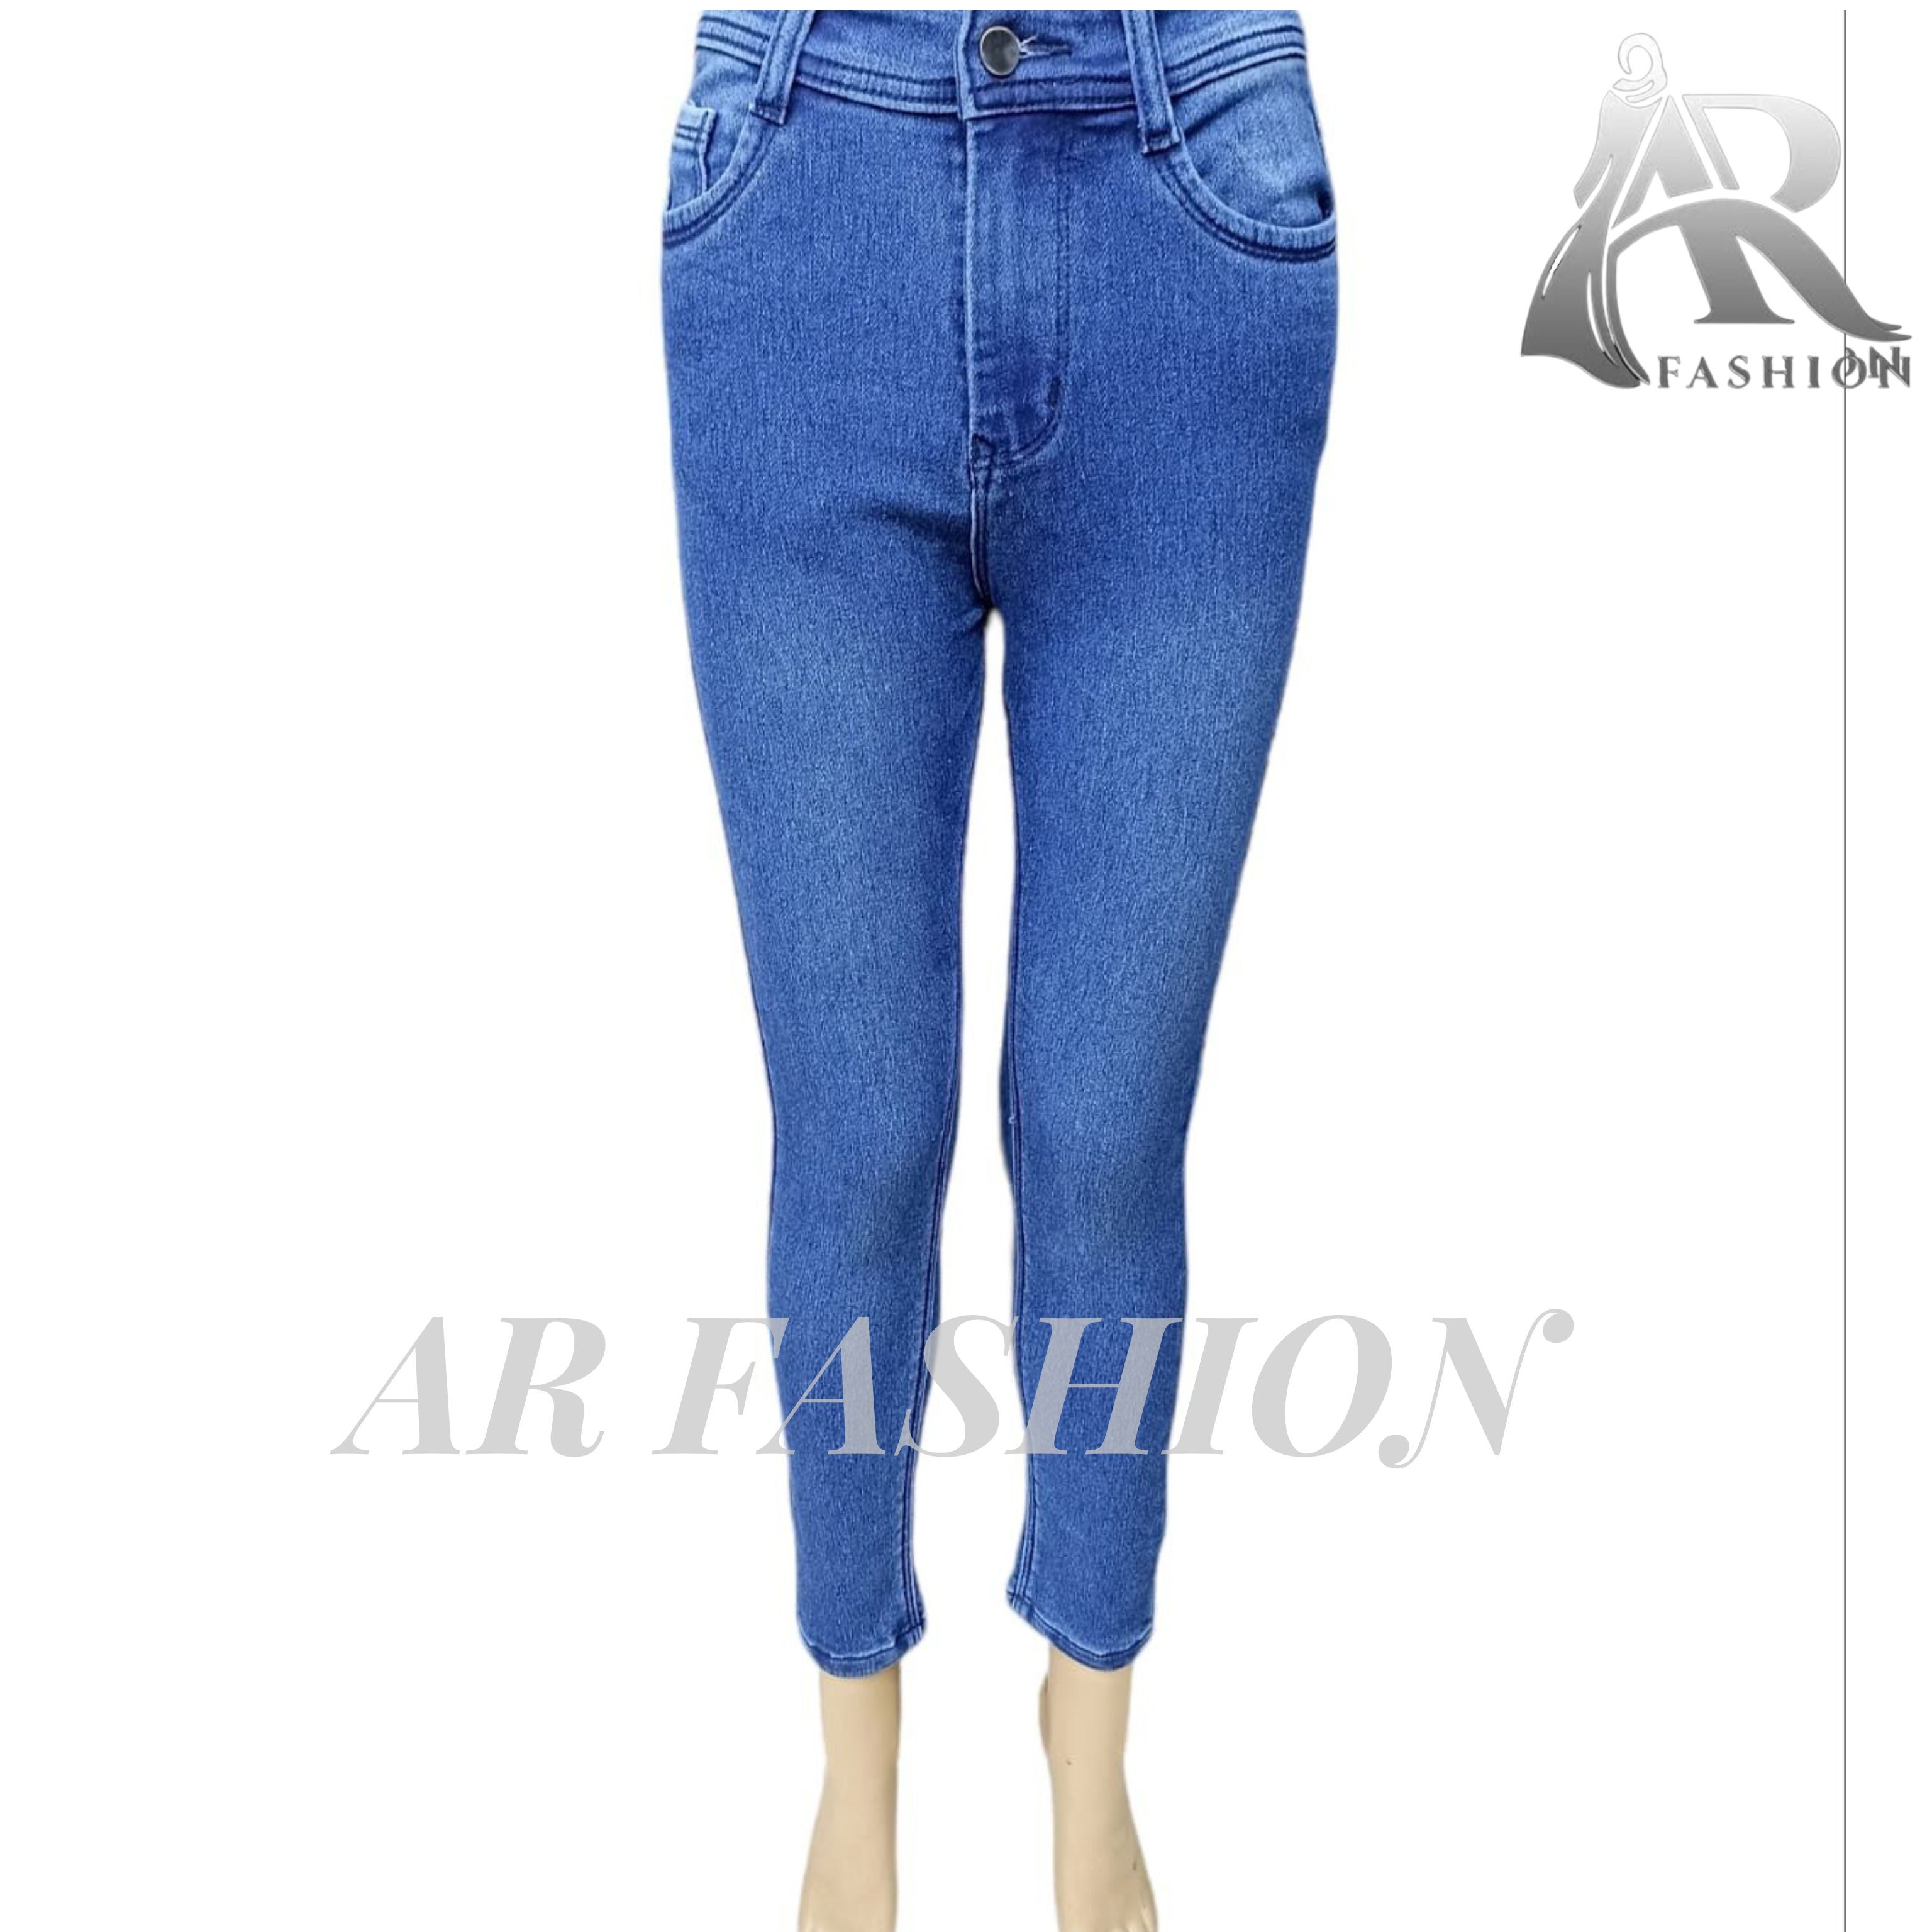 stretch denim jeans at Latest Price, Manufacturer in Mumbai